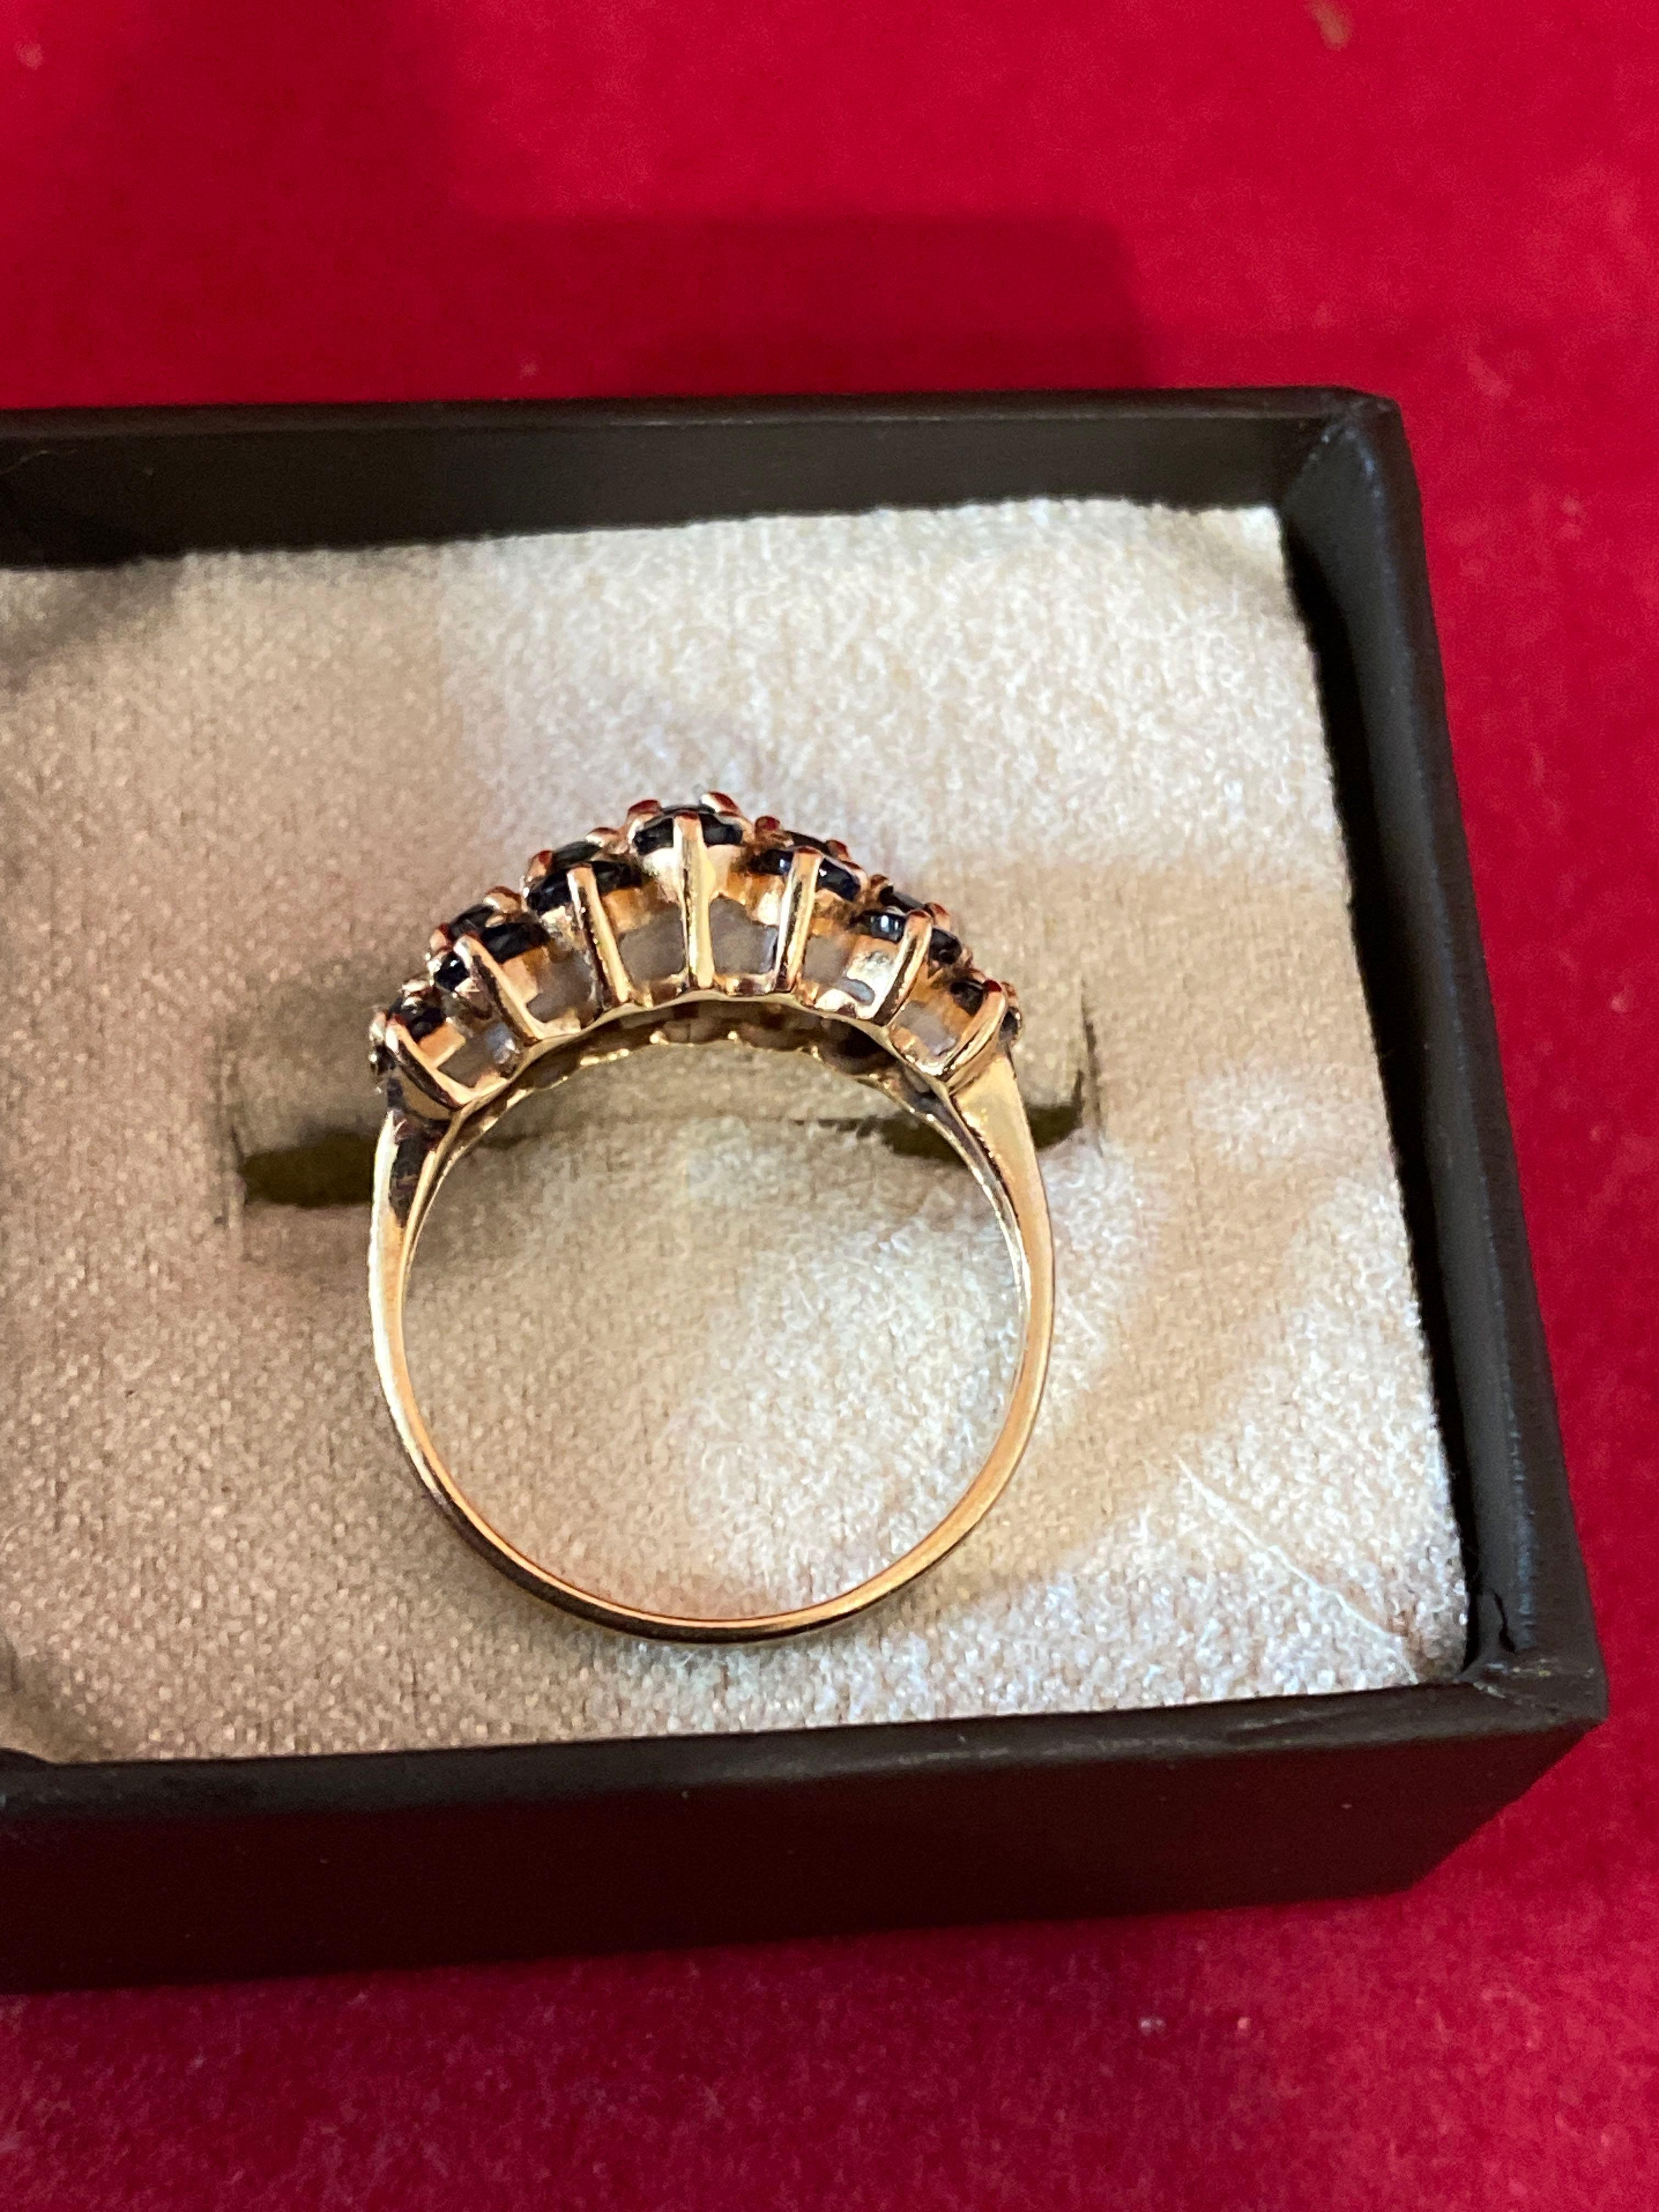 Beautiful 10k Gold and Ruby/garnet multi row stone ring